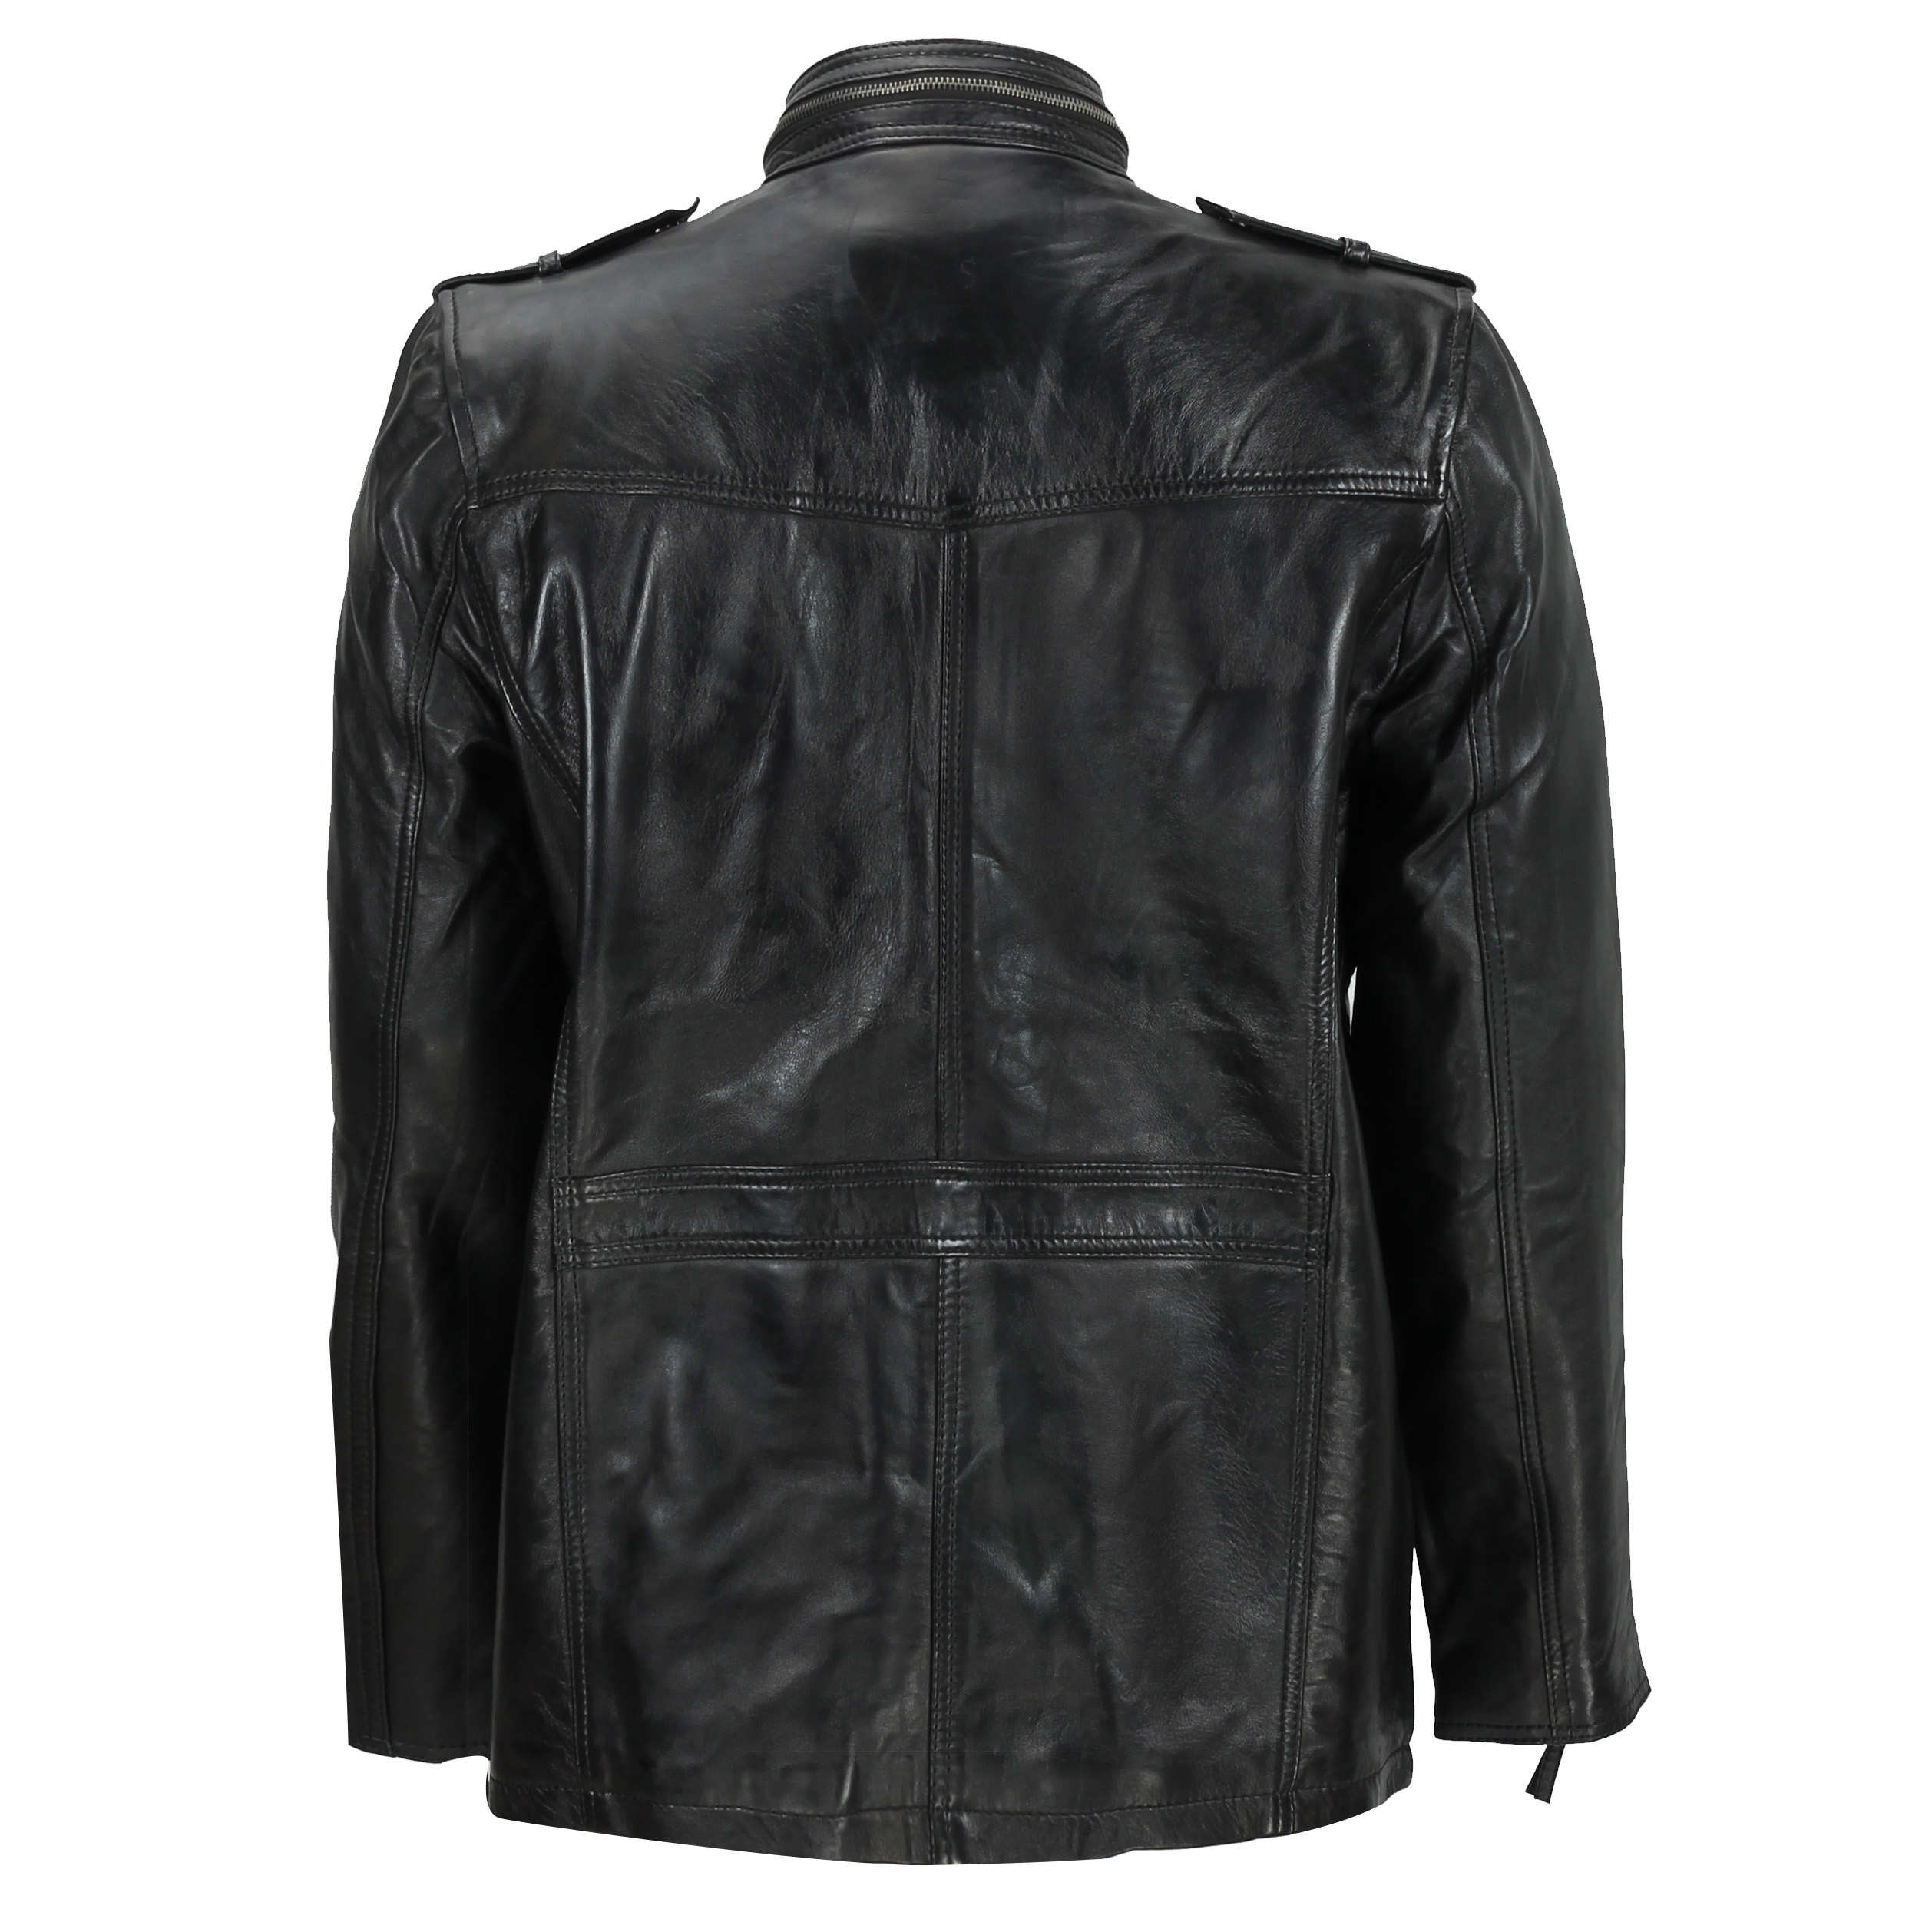 Mens Military Jacket Black New Smart Casual Vintage Real Lambskin Leather Jacket 